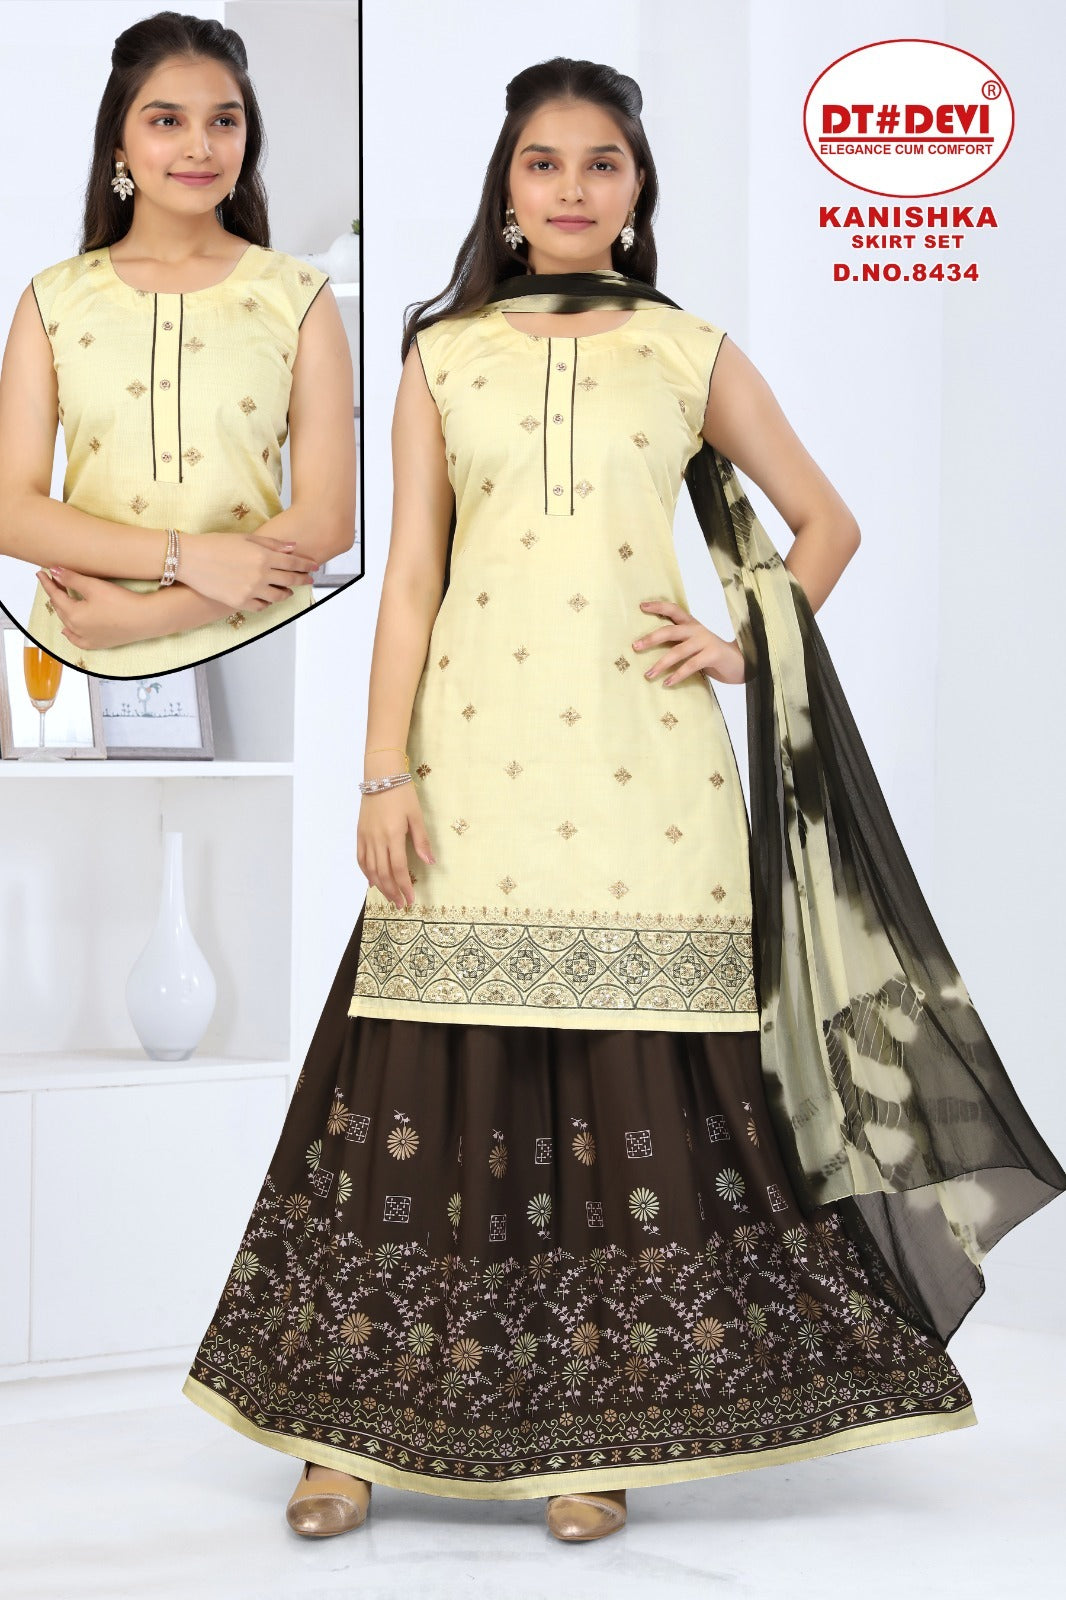 Kanishka 8434 Dt Devi Silk Girls Readymade Skirt Style Suits